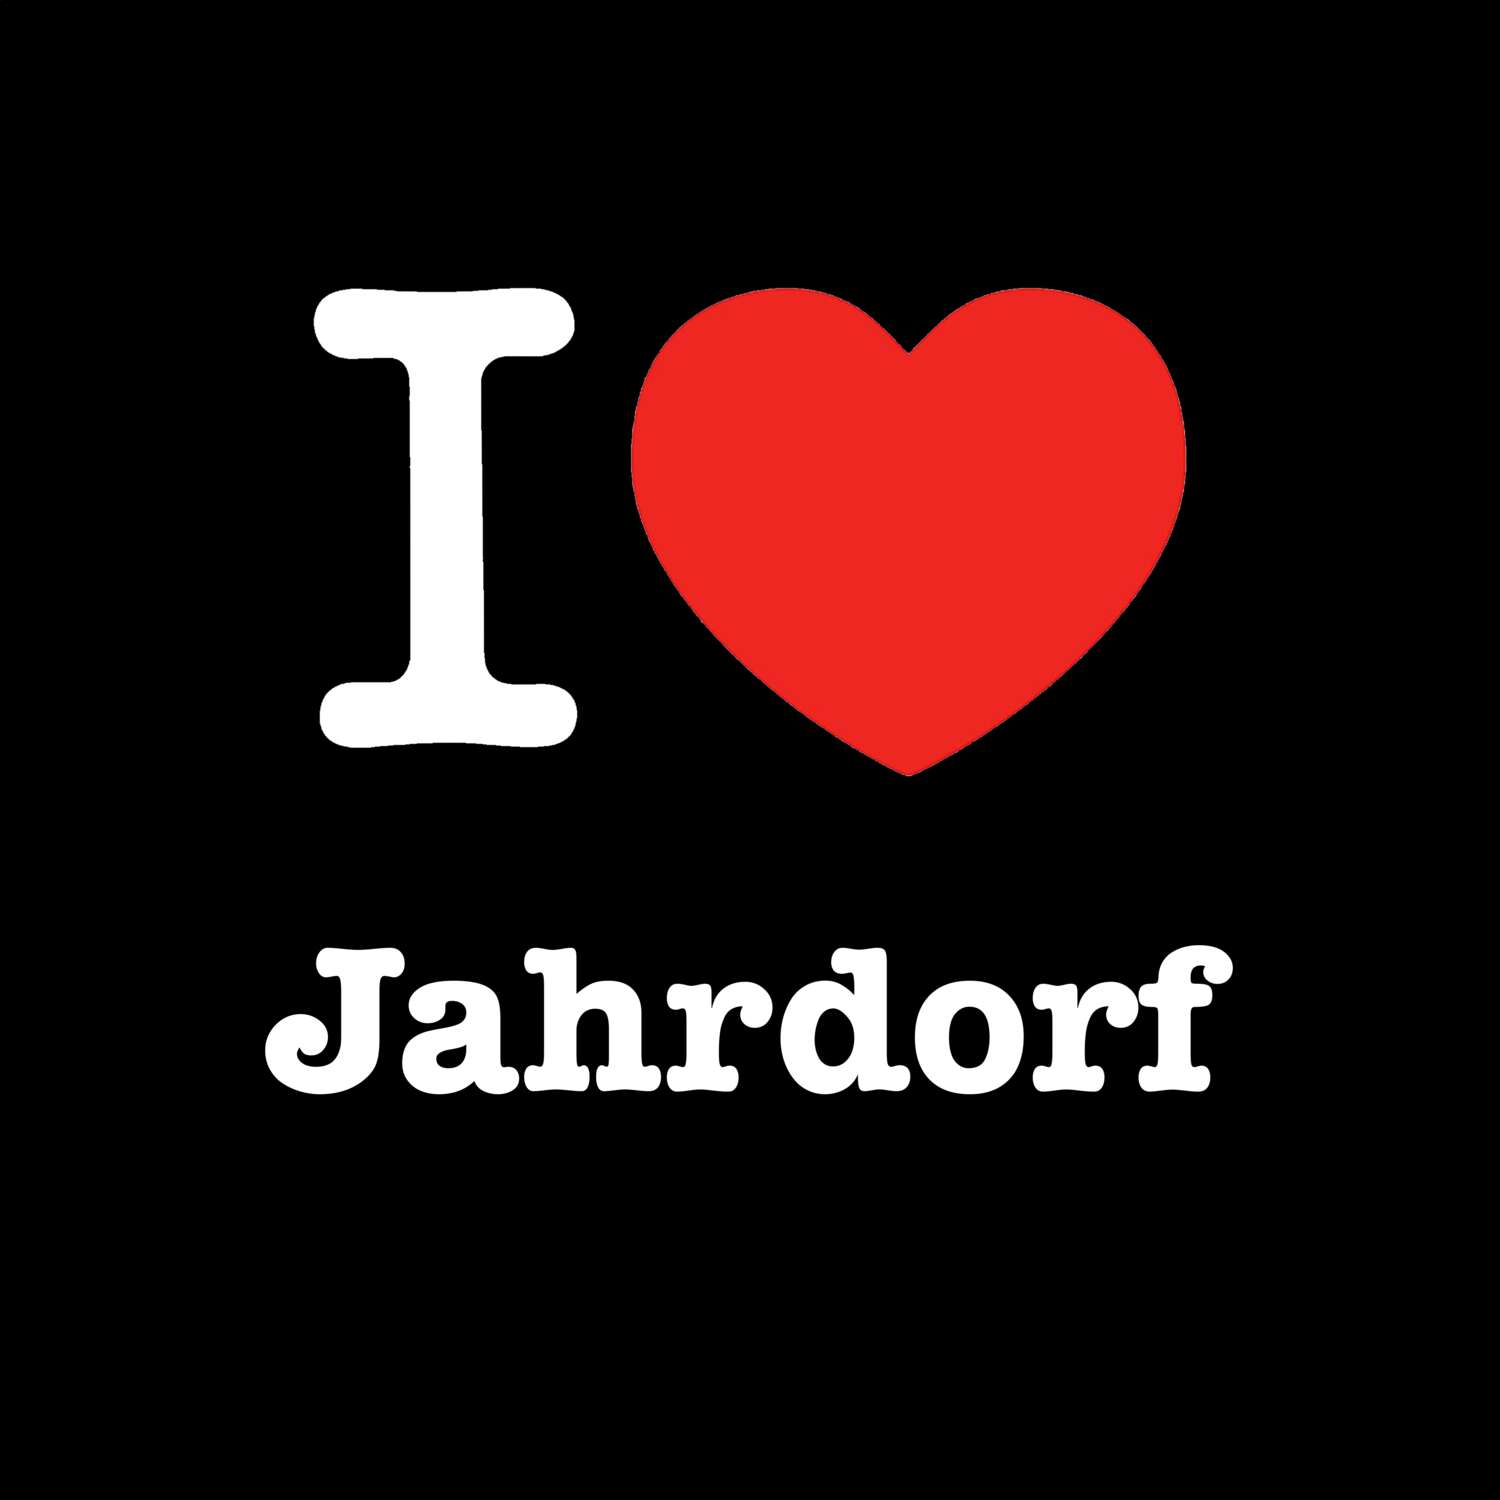 Jahrdorf T-Shirt »I love«